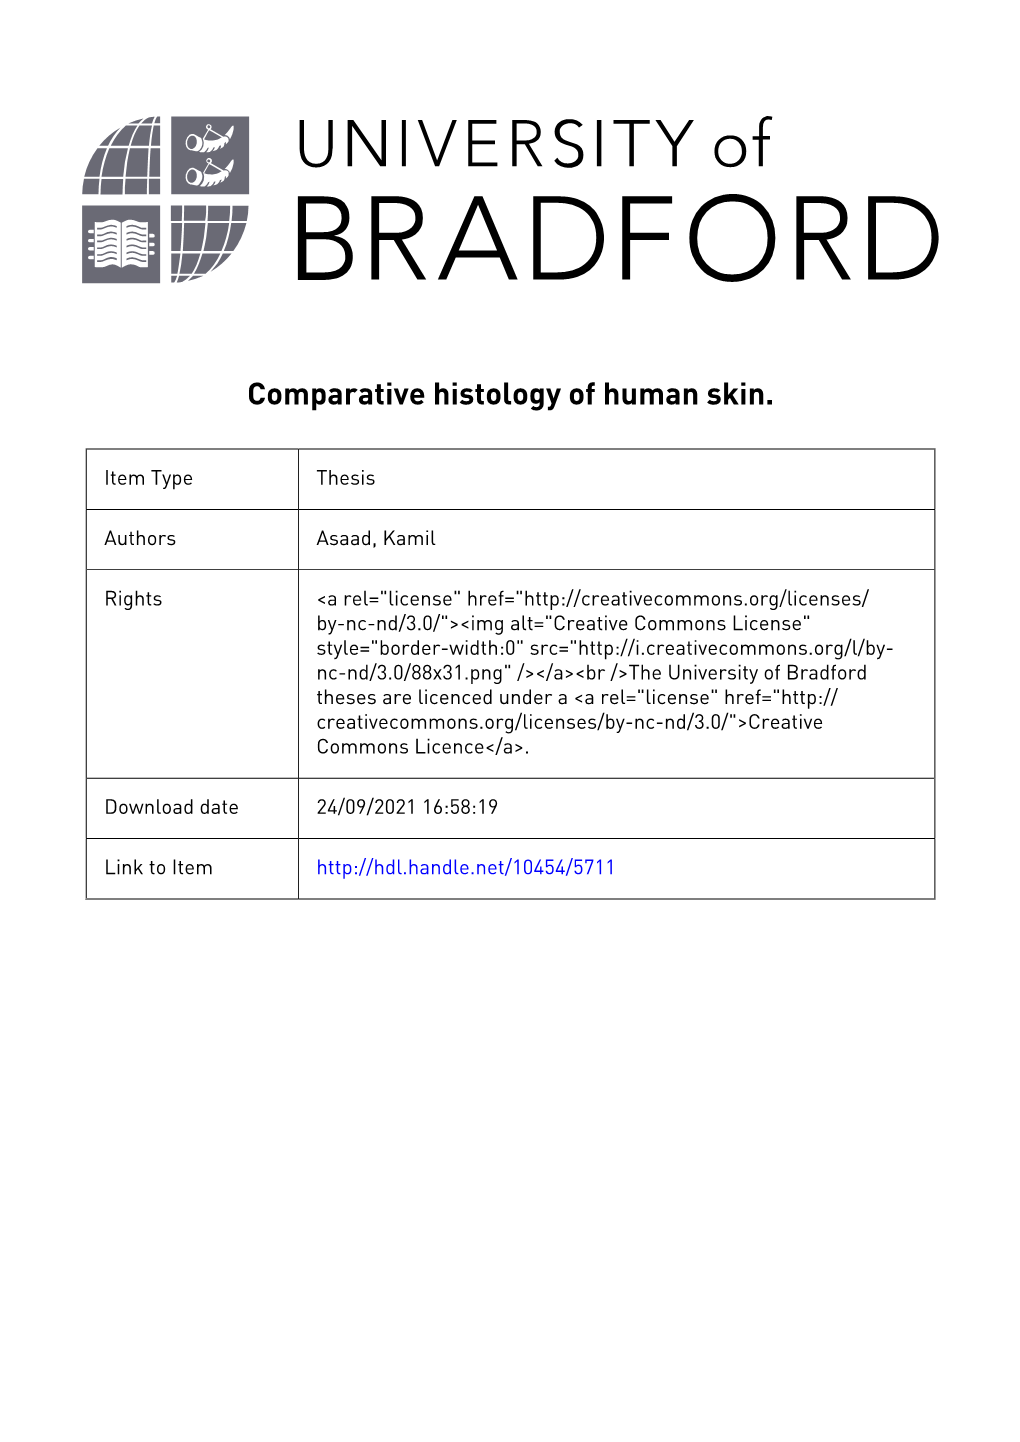 University of Bradford Ethesis